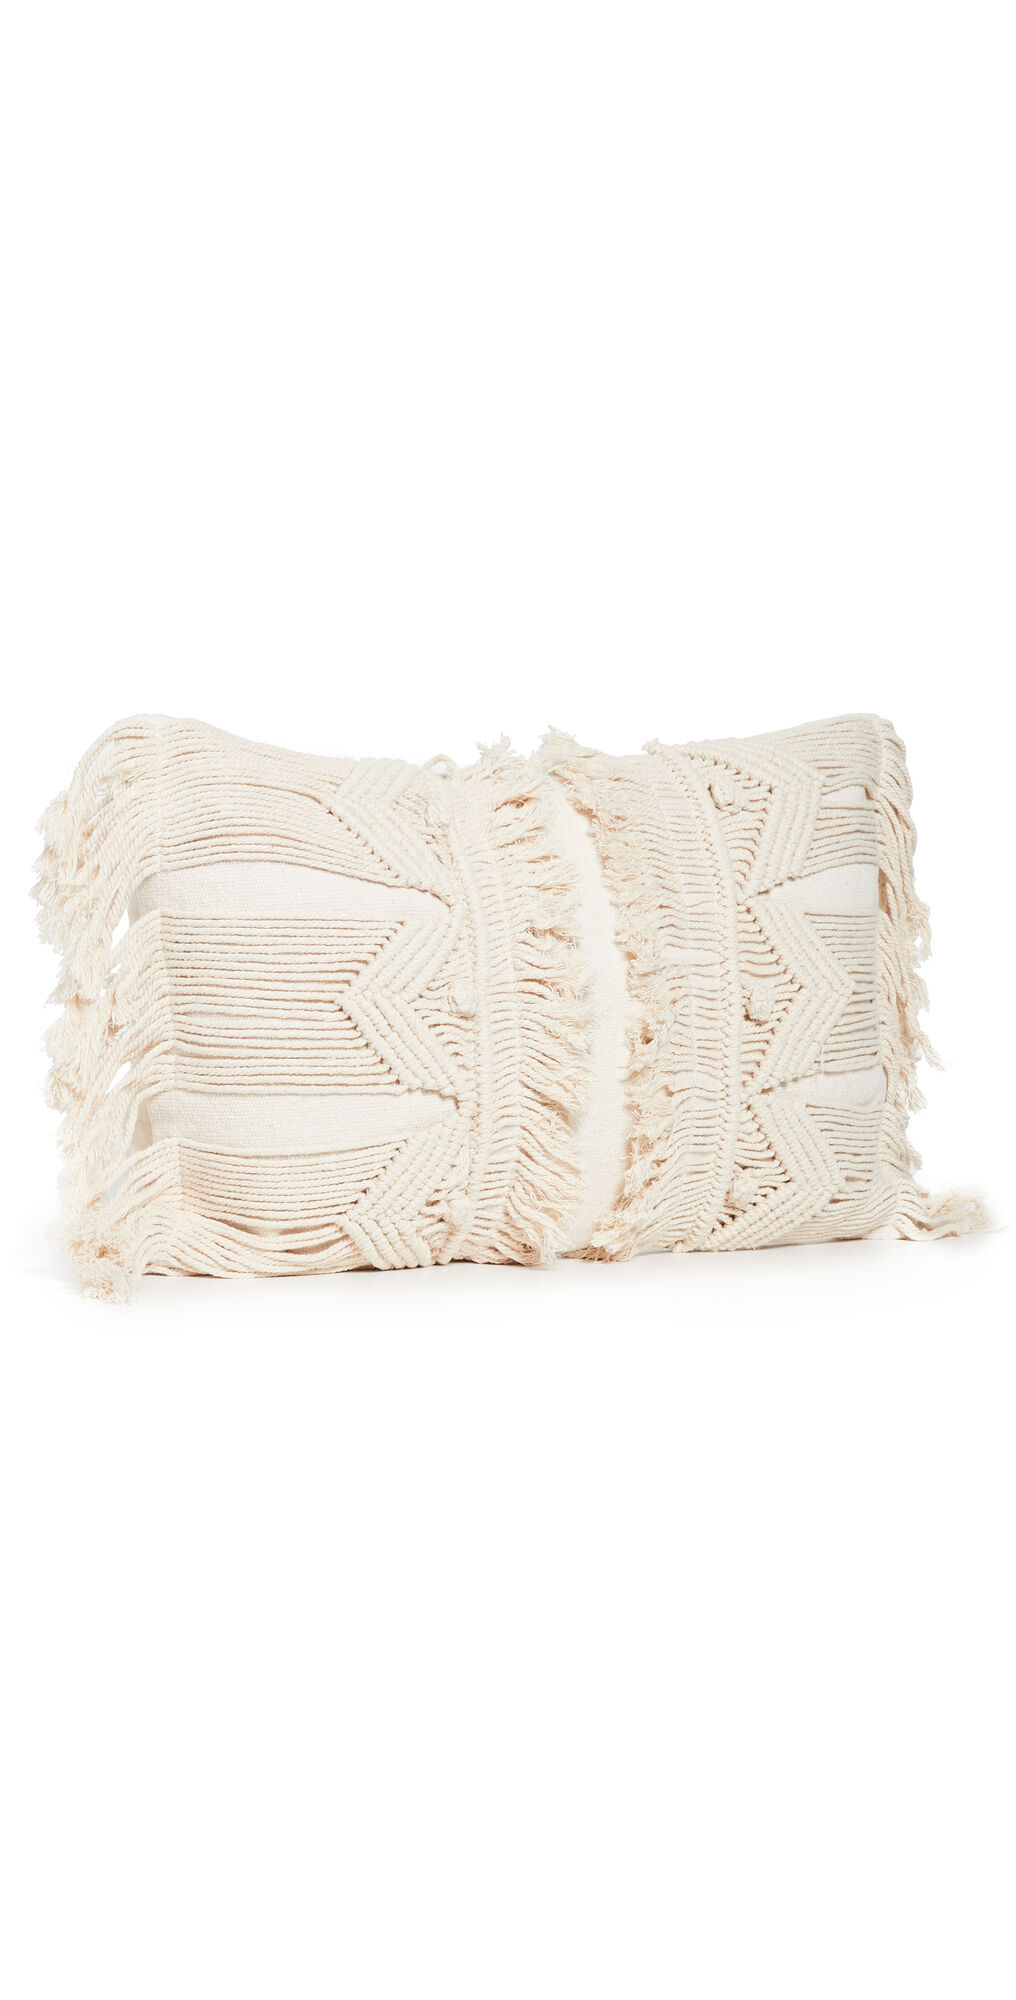 Shopbop Home Shopbop @Home Ophelia Pillow Ivory One Size  Ivory  size:One Size